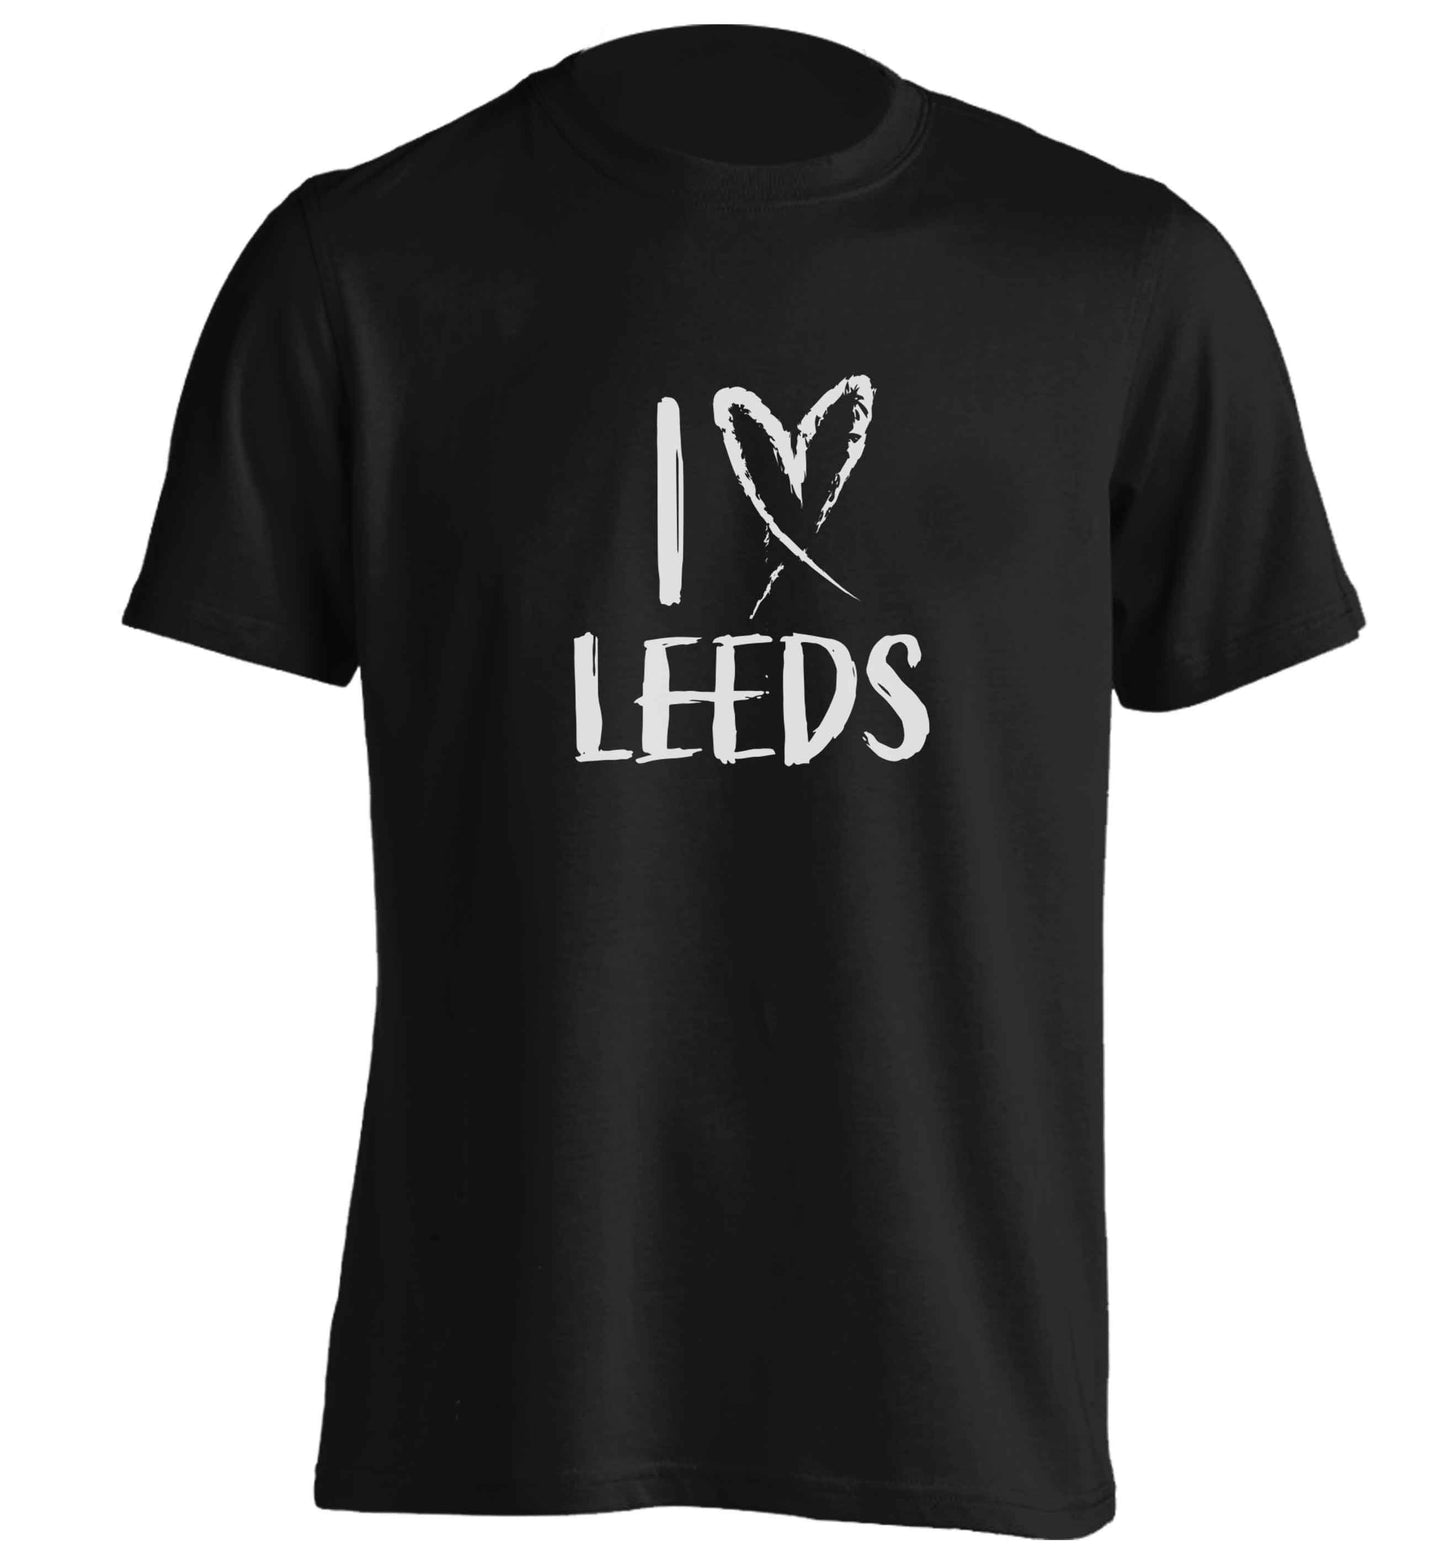 I love Leeds adults unisex black Tshirt 2XL